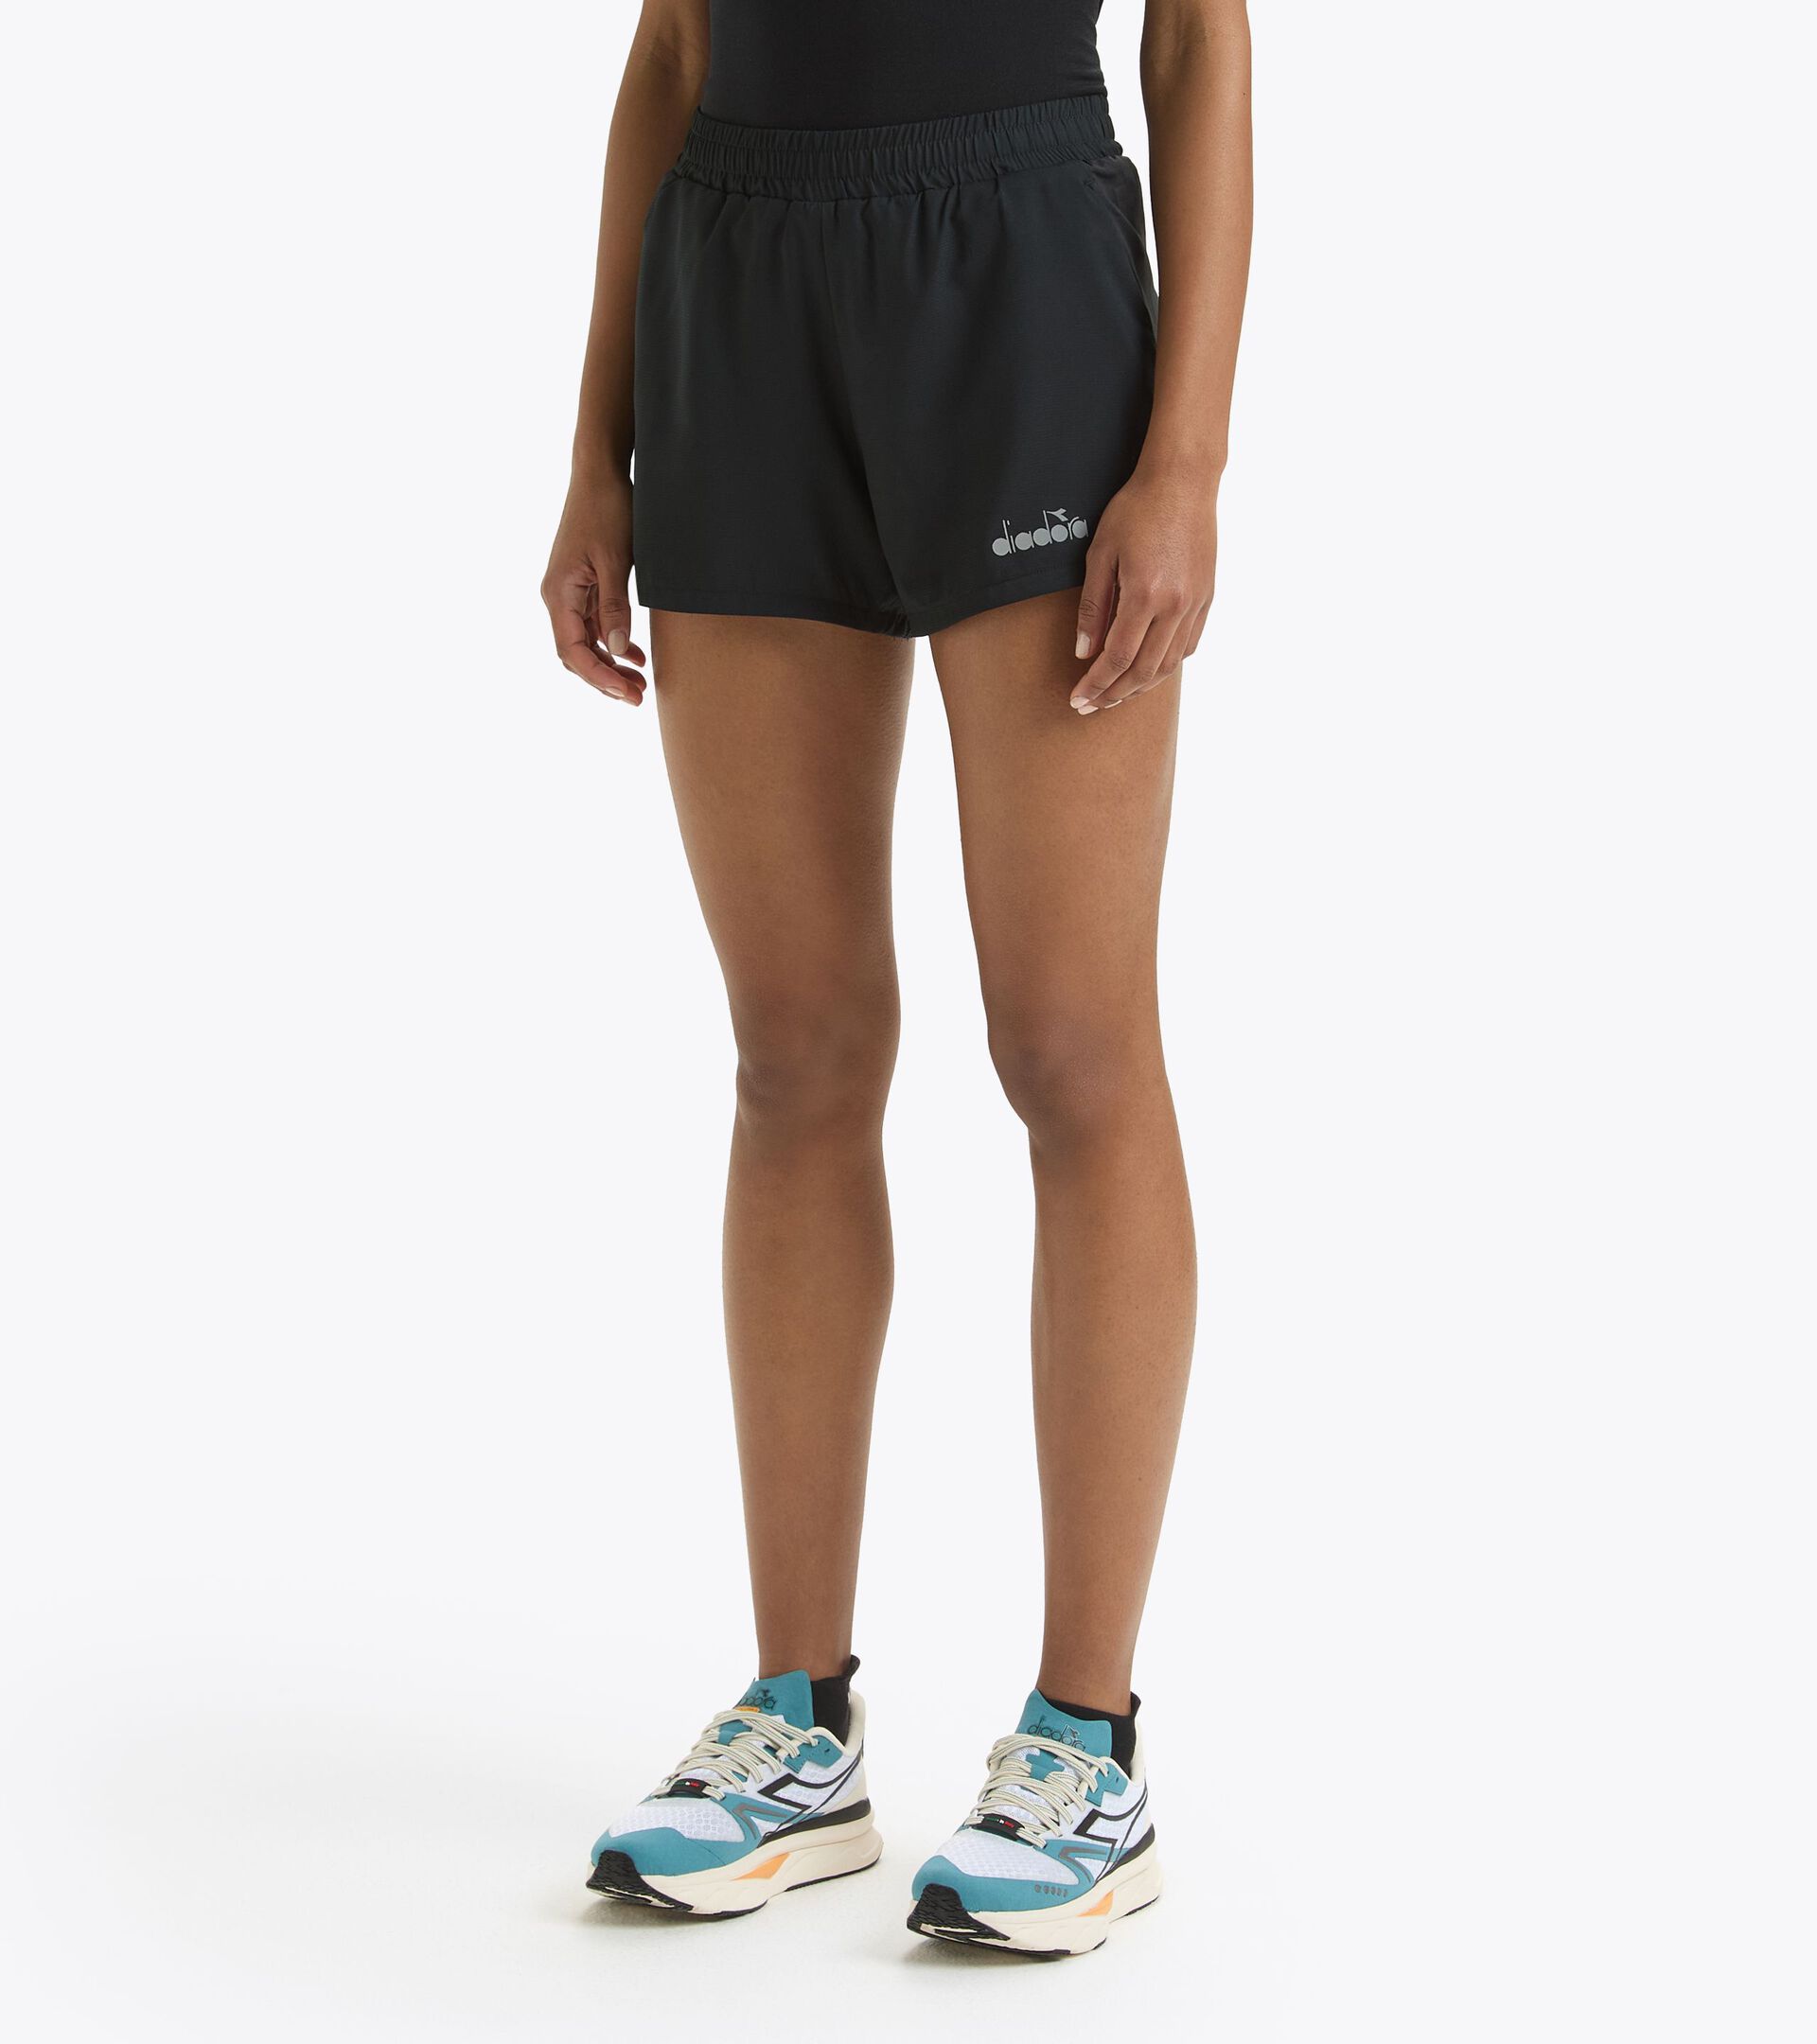 4’’ running shorts - Light fabric - Women’s
 L. SUPER LIGHT SHORTS 4" BLACK - Diadora